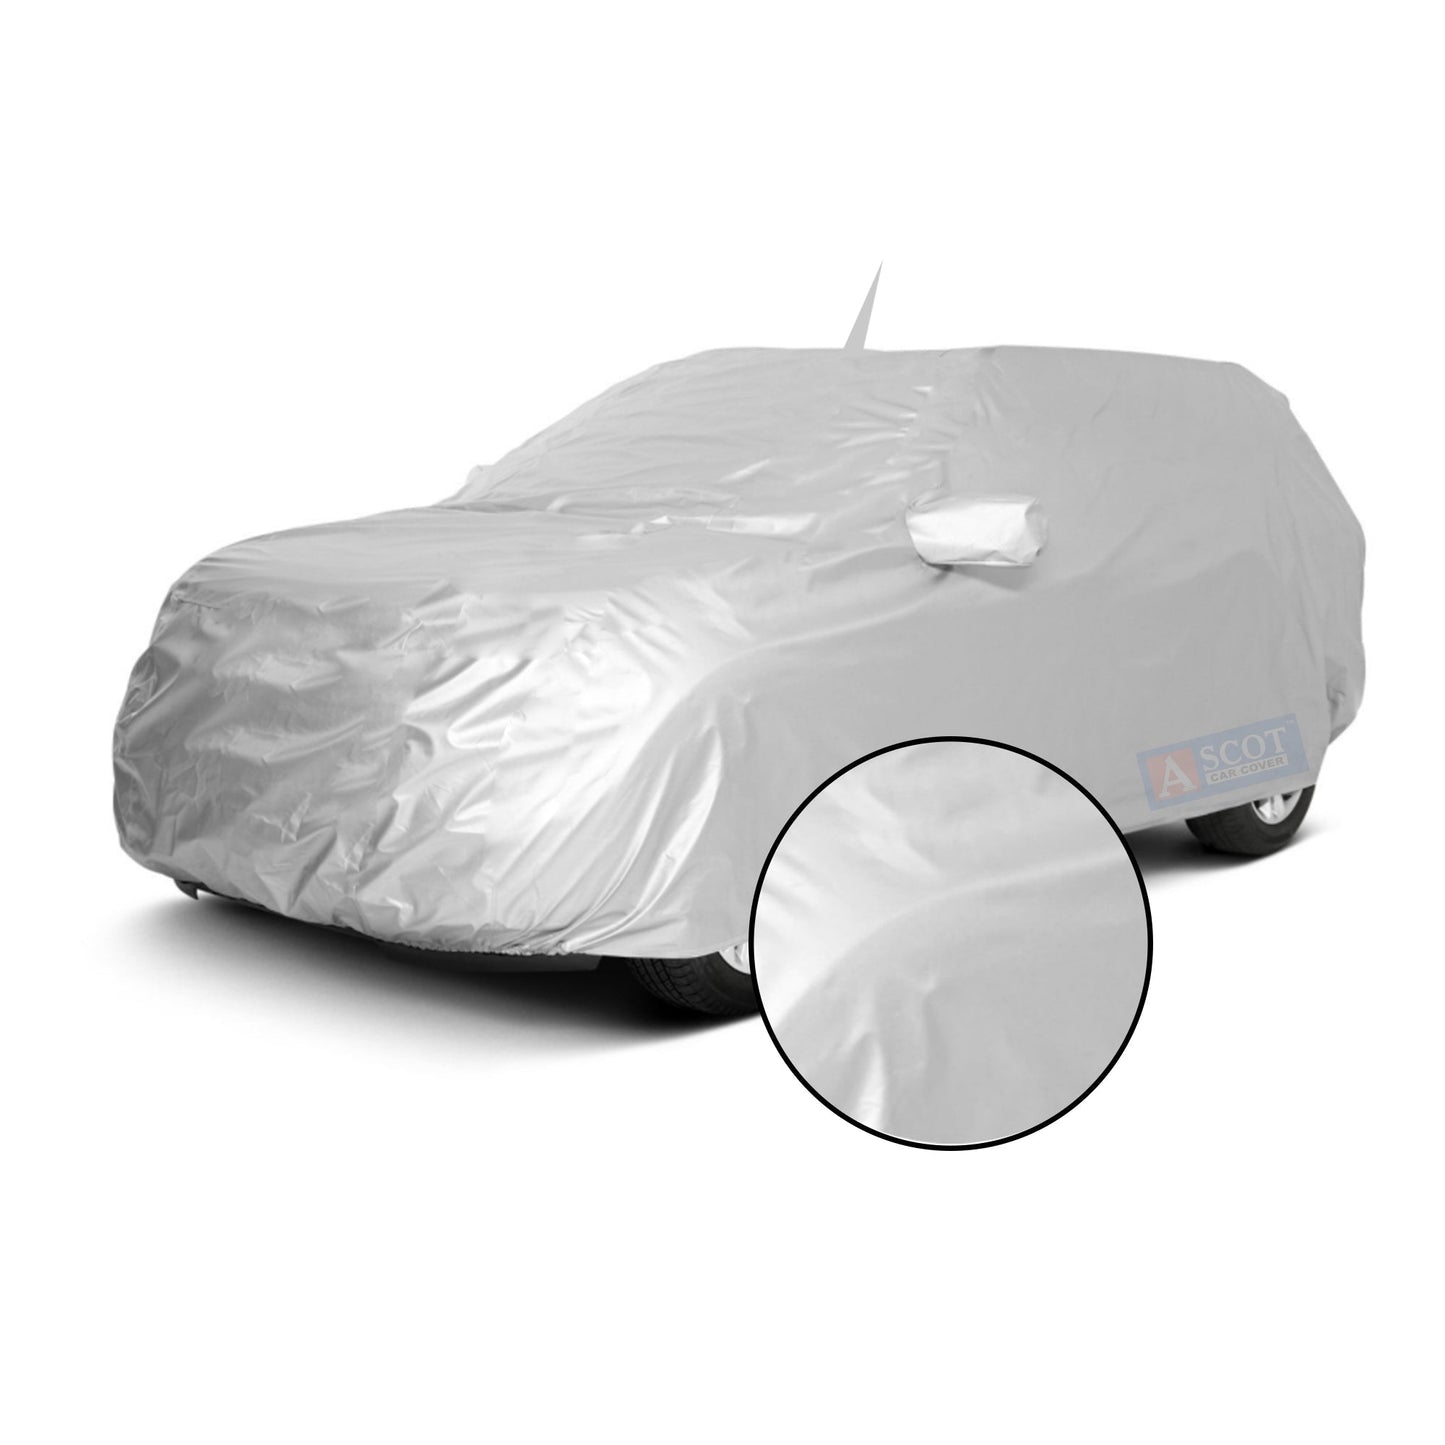 Ascot Tata Hexa Car Body Cover Dust Proof, Trippel Stitched